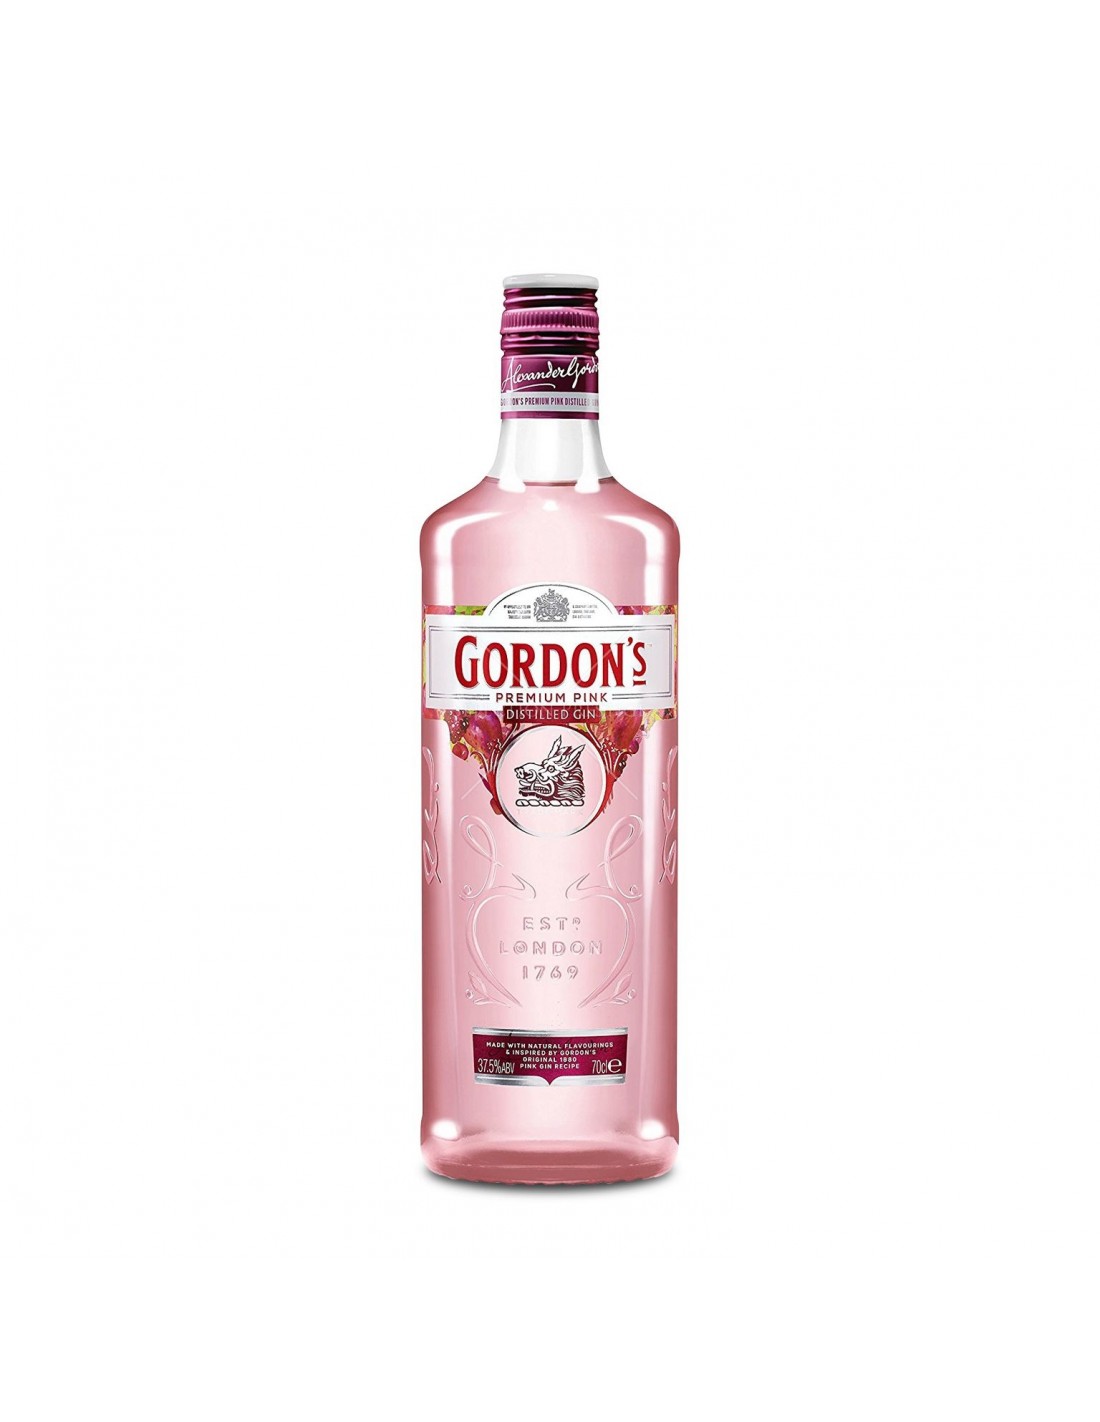 Gin Gordon’s Pink Dry, 37.5% alc., 0.7L, Anglia alcooldiscount.ro